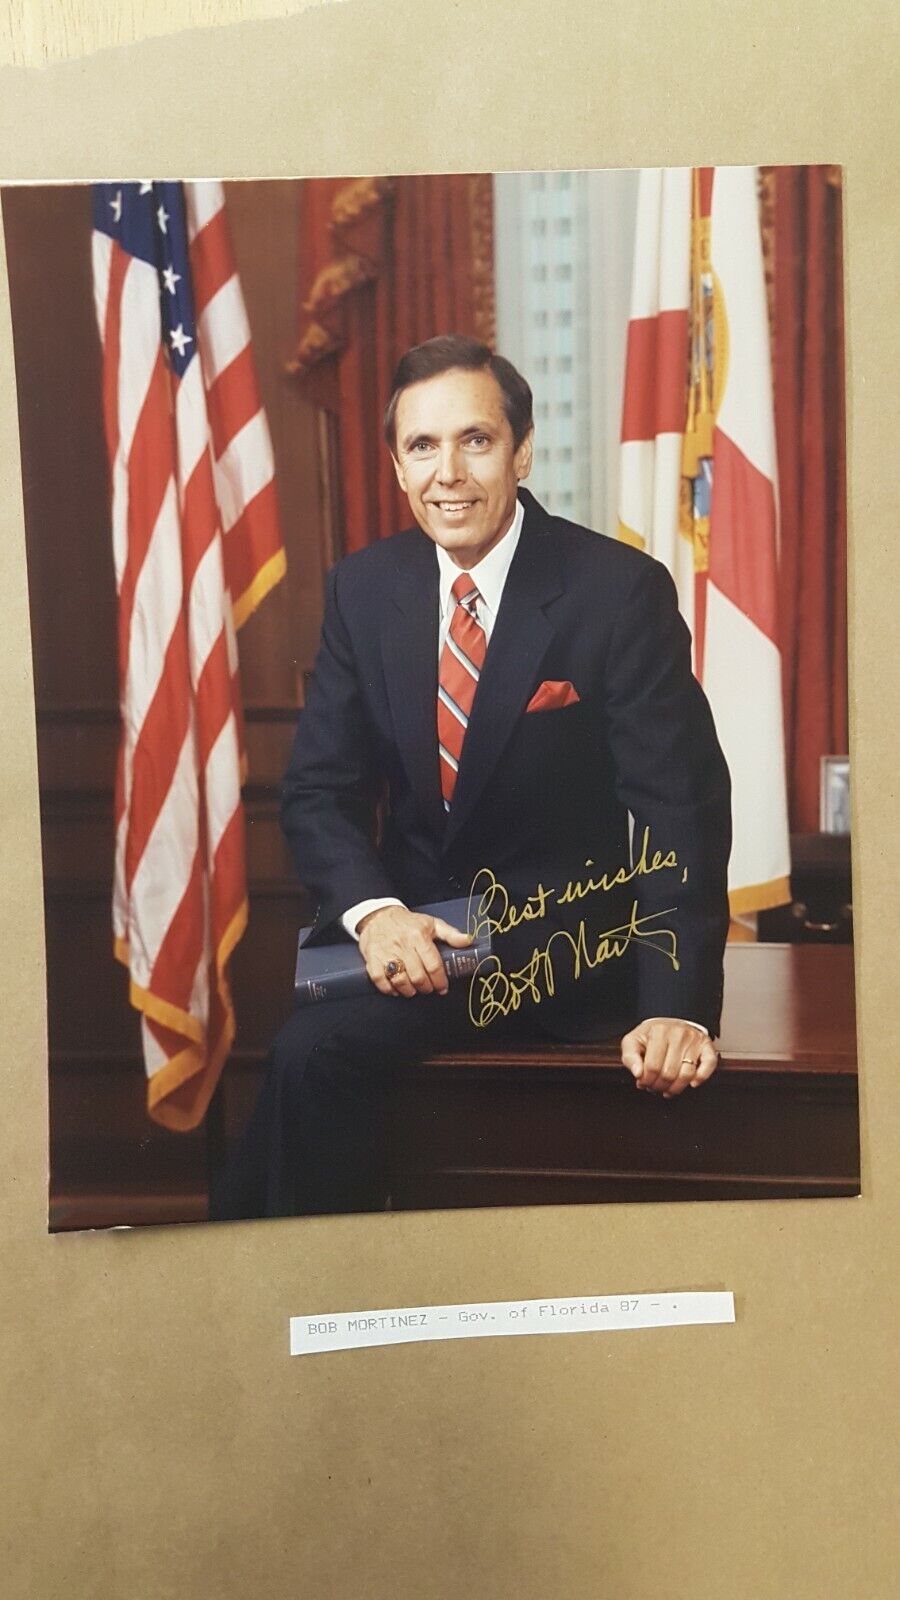 Bob Mortinez Autographed Photo 8x10 Politician 1st Spanish Governor Florida sign